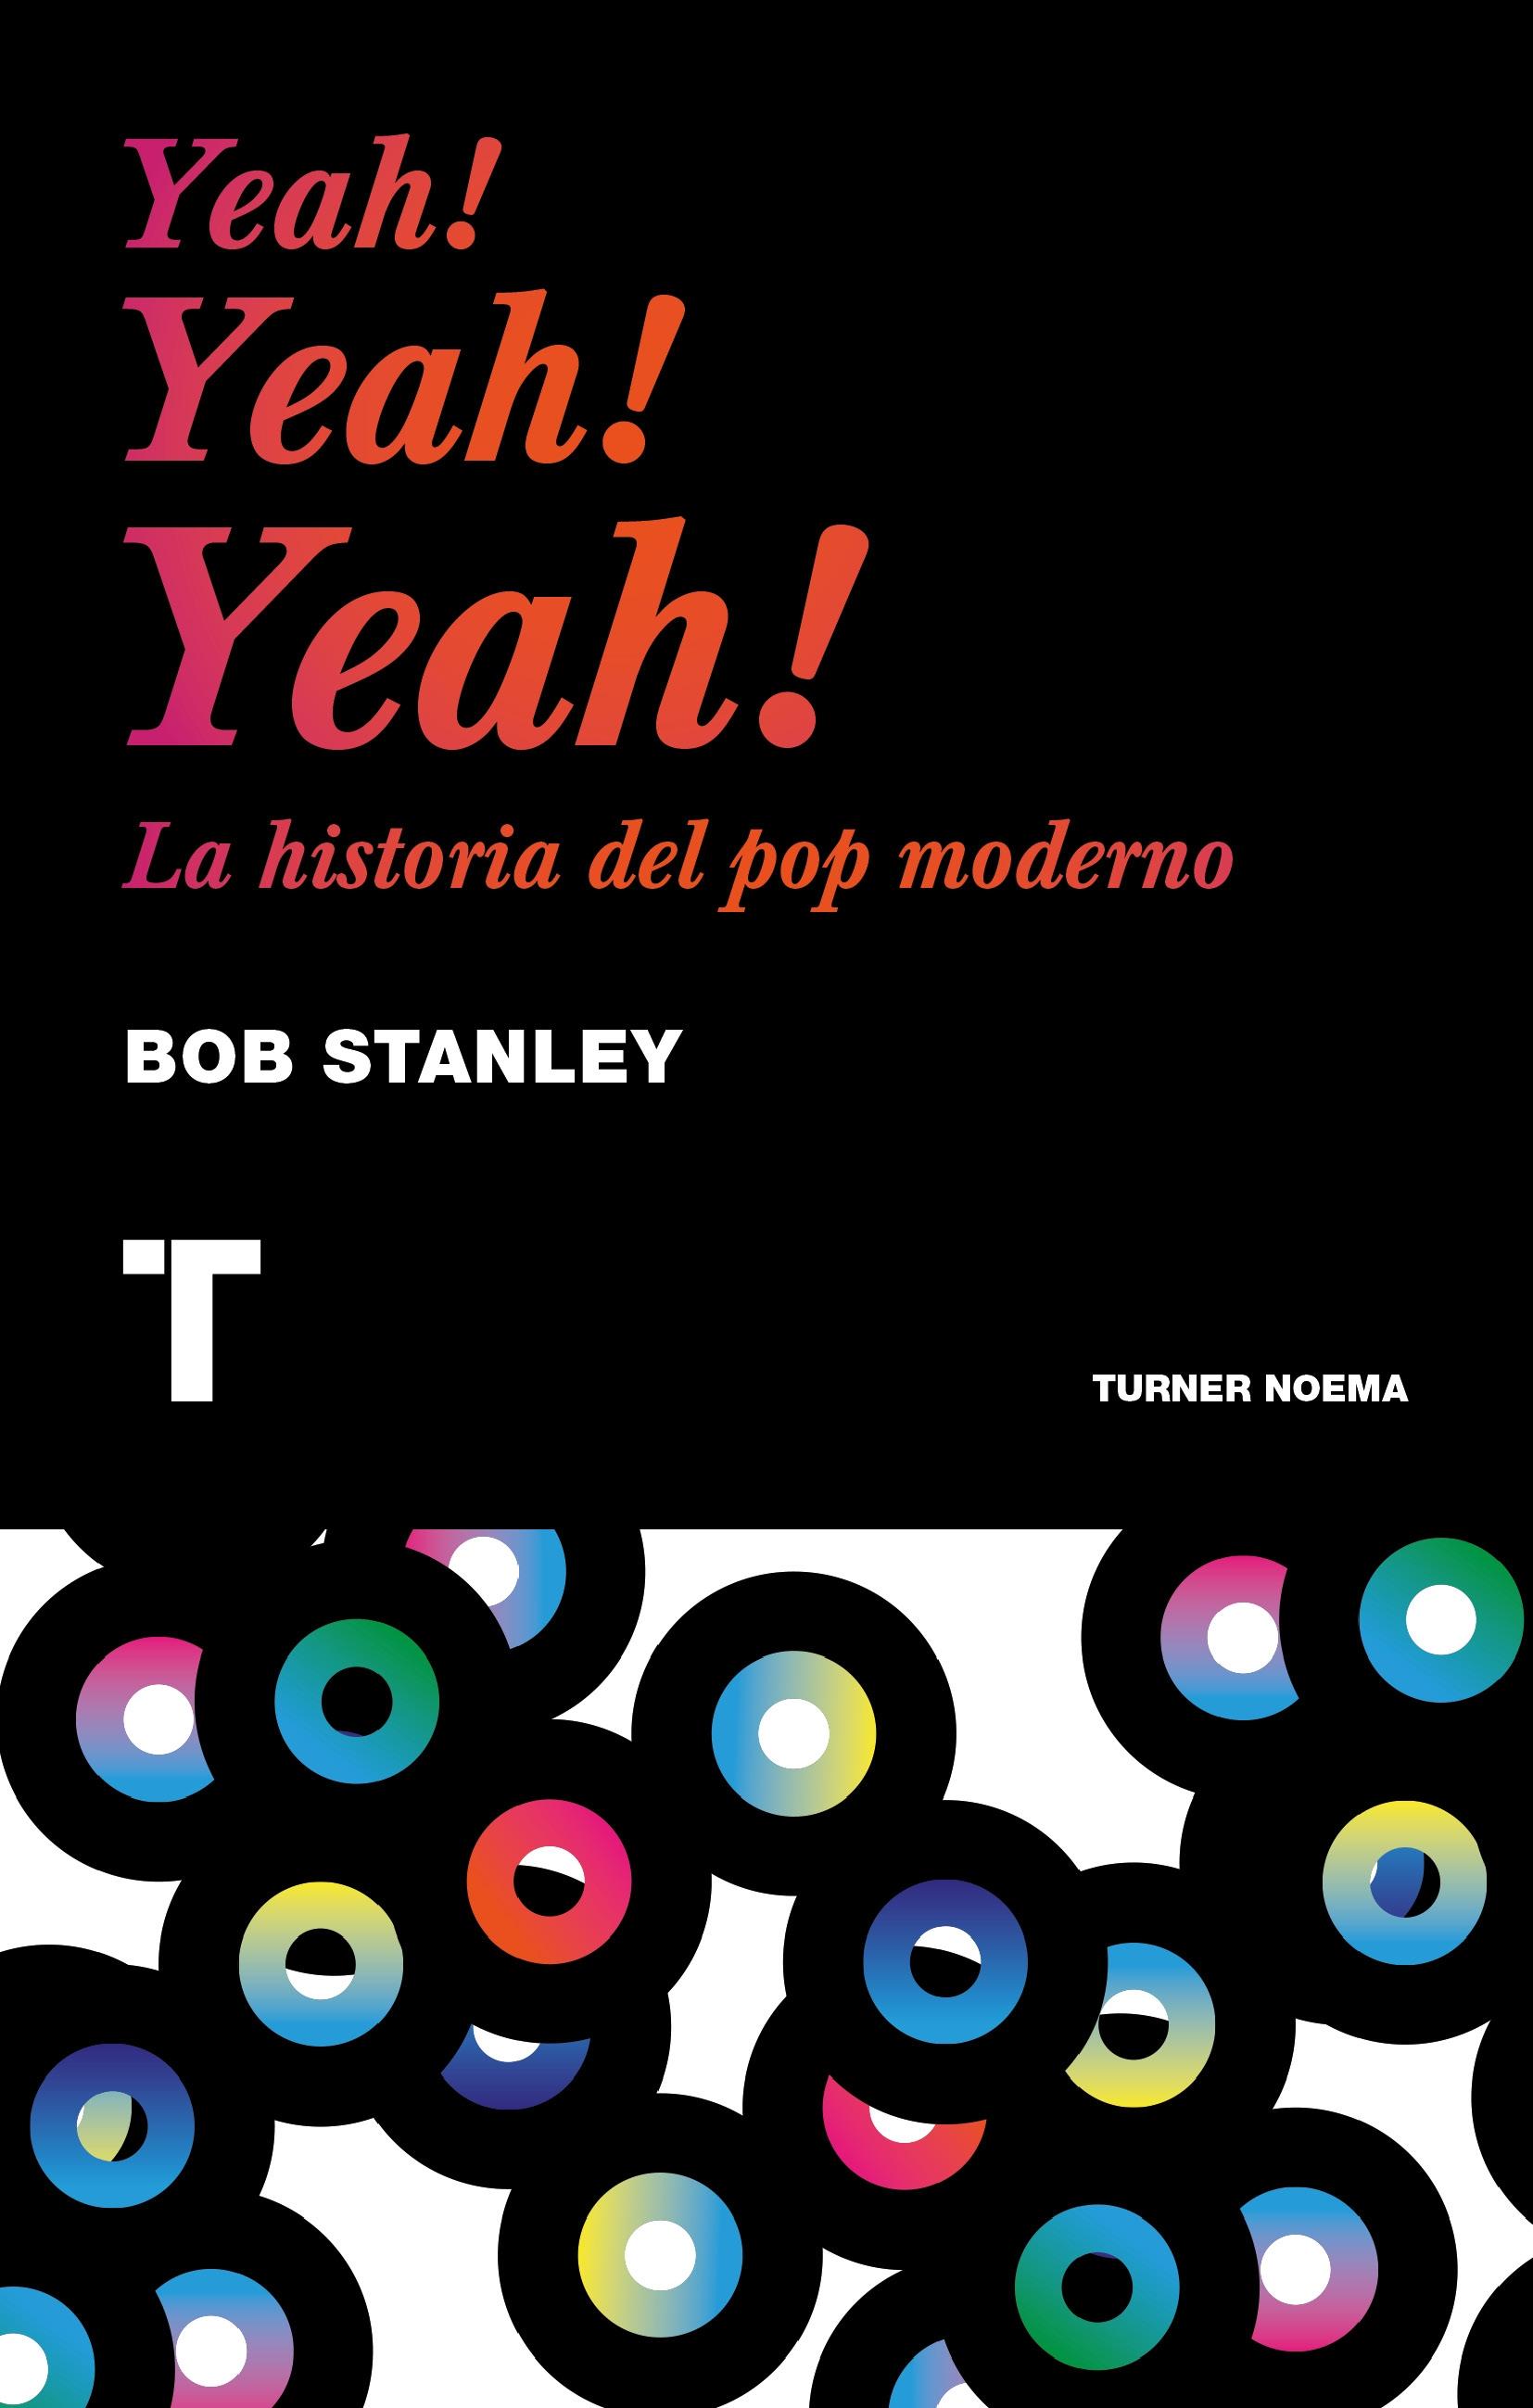 Yeah! Yeah! Yeah! "La Historia del Pop Moderno"